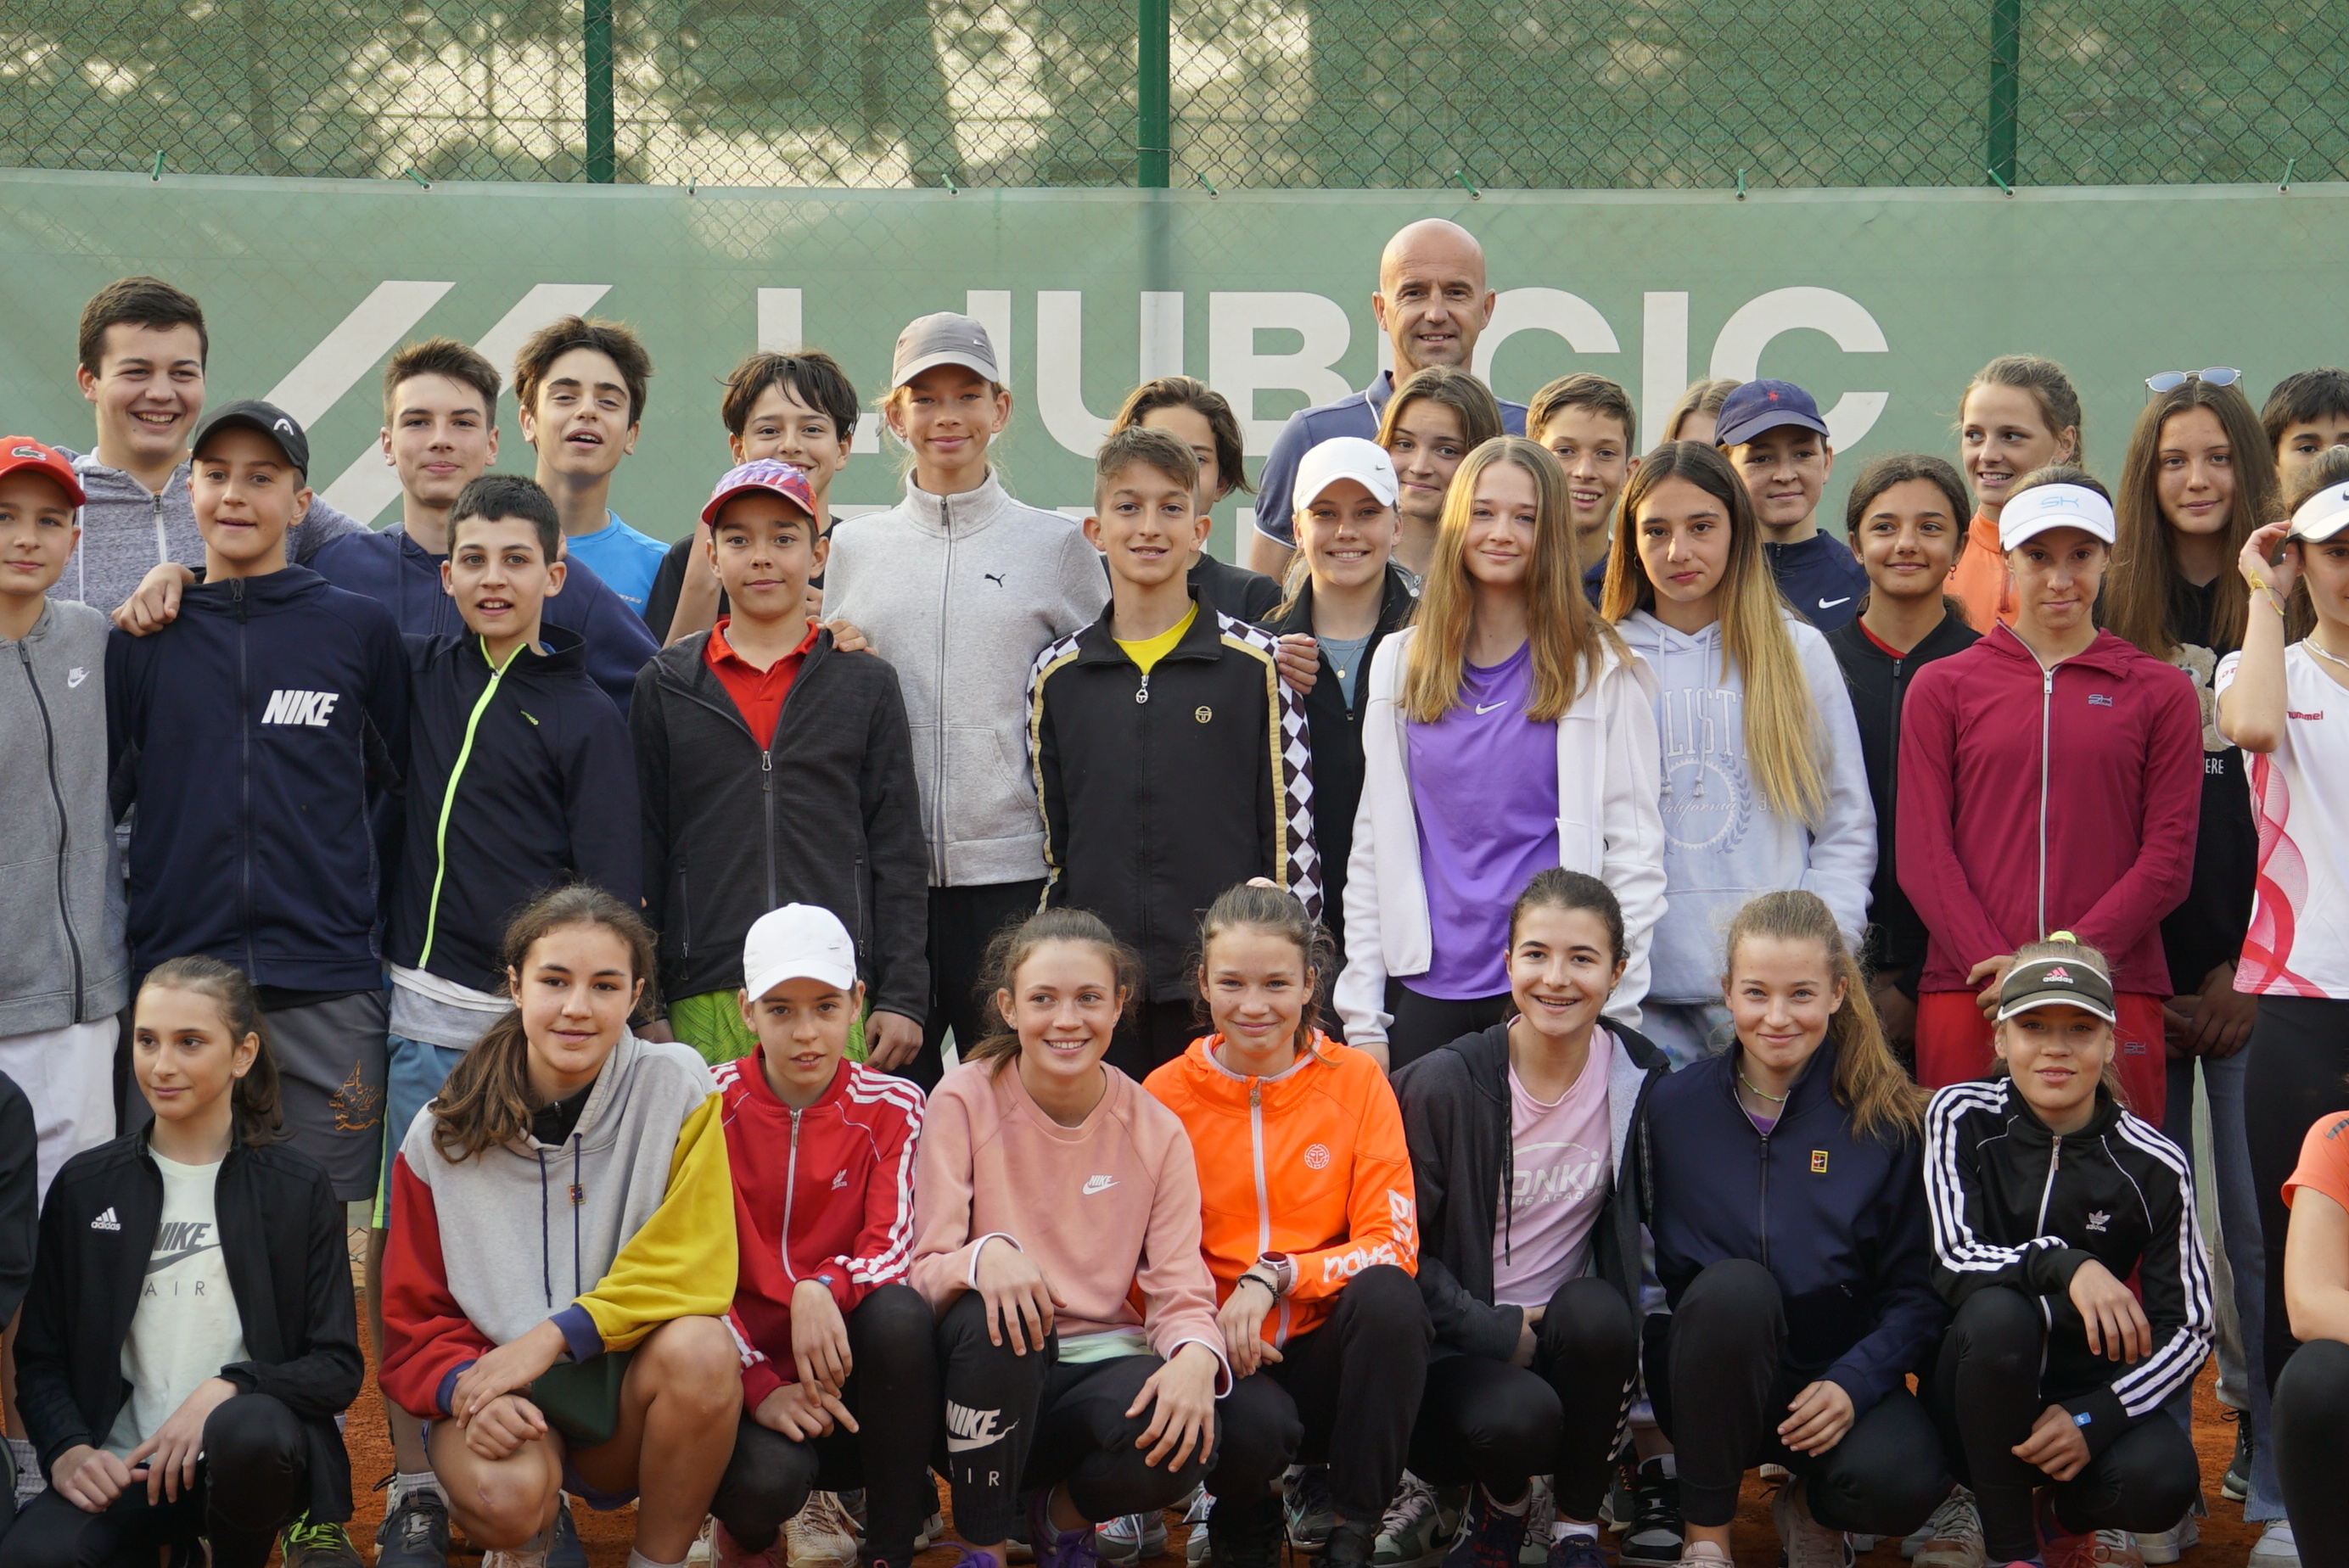 Hrvatski kvintet u 3. kolu Ljubičić Tennis Academy Opena u Velom Lošinju